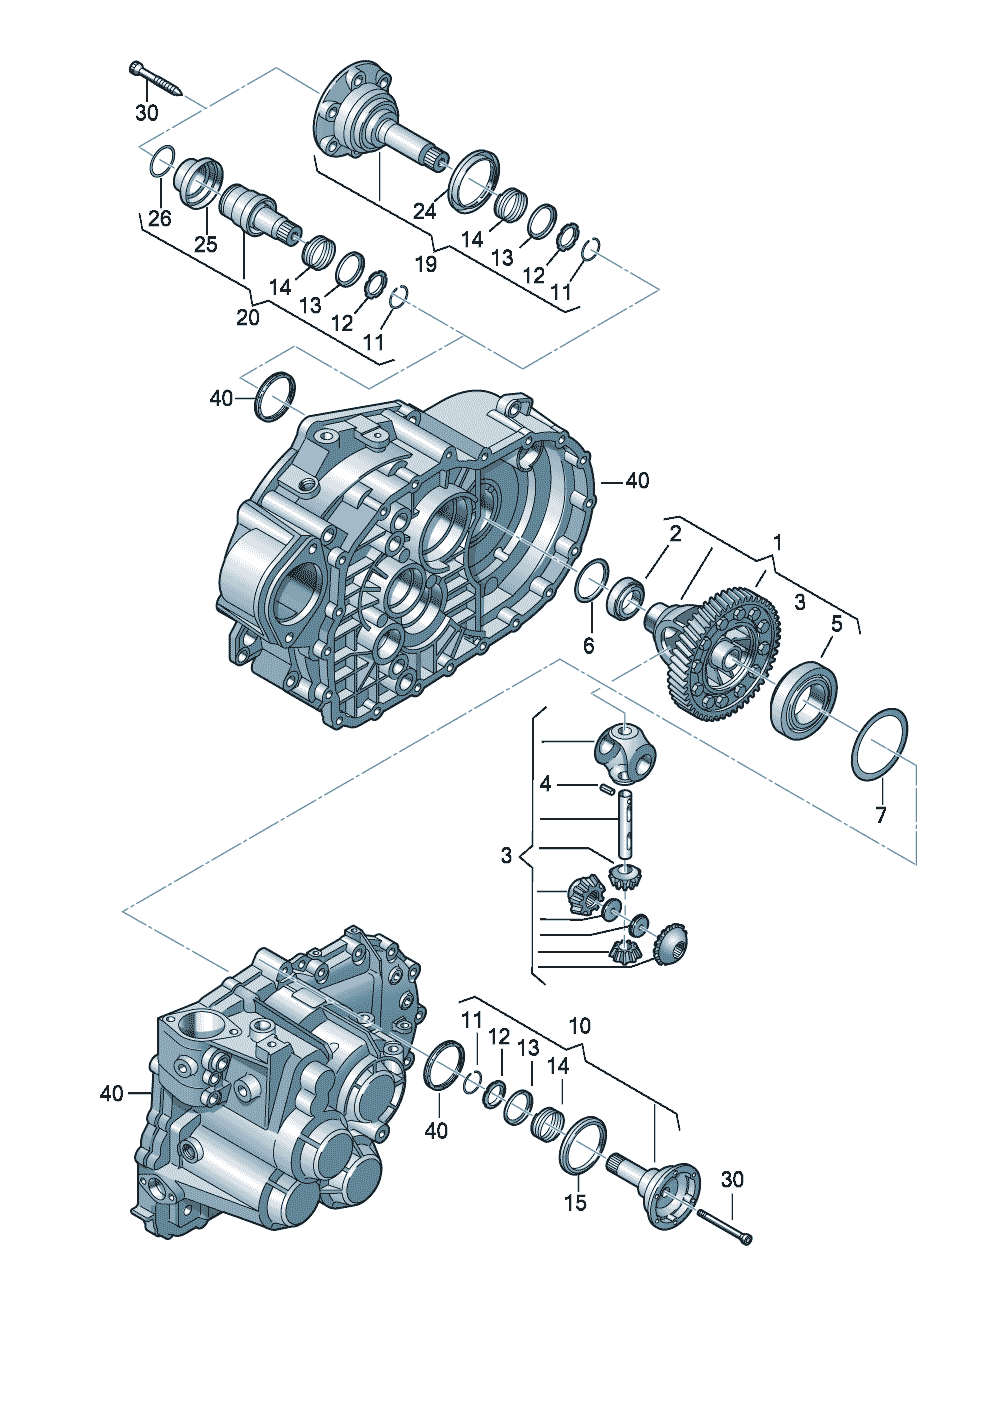 Differentialoutput gear6-speed manual transmission 2.0 Ltr. - Audi TT/TTS Coupe/Roadster - att